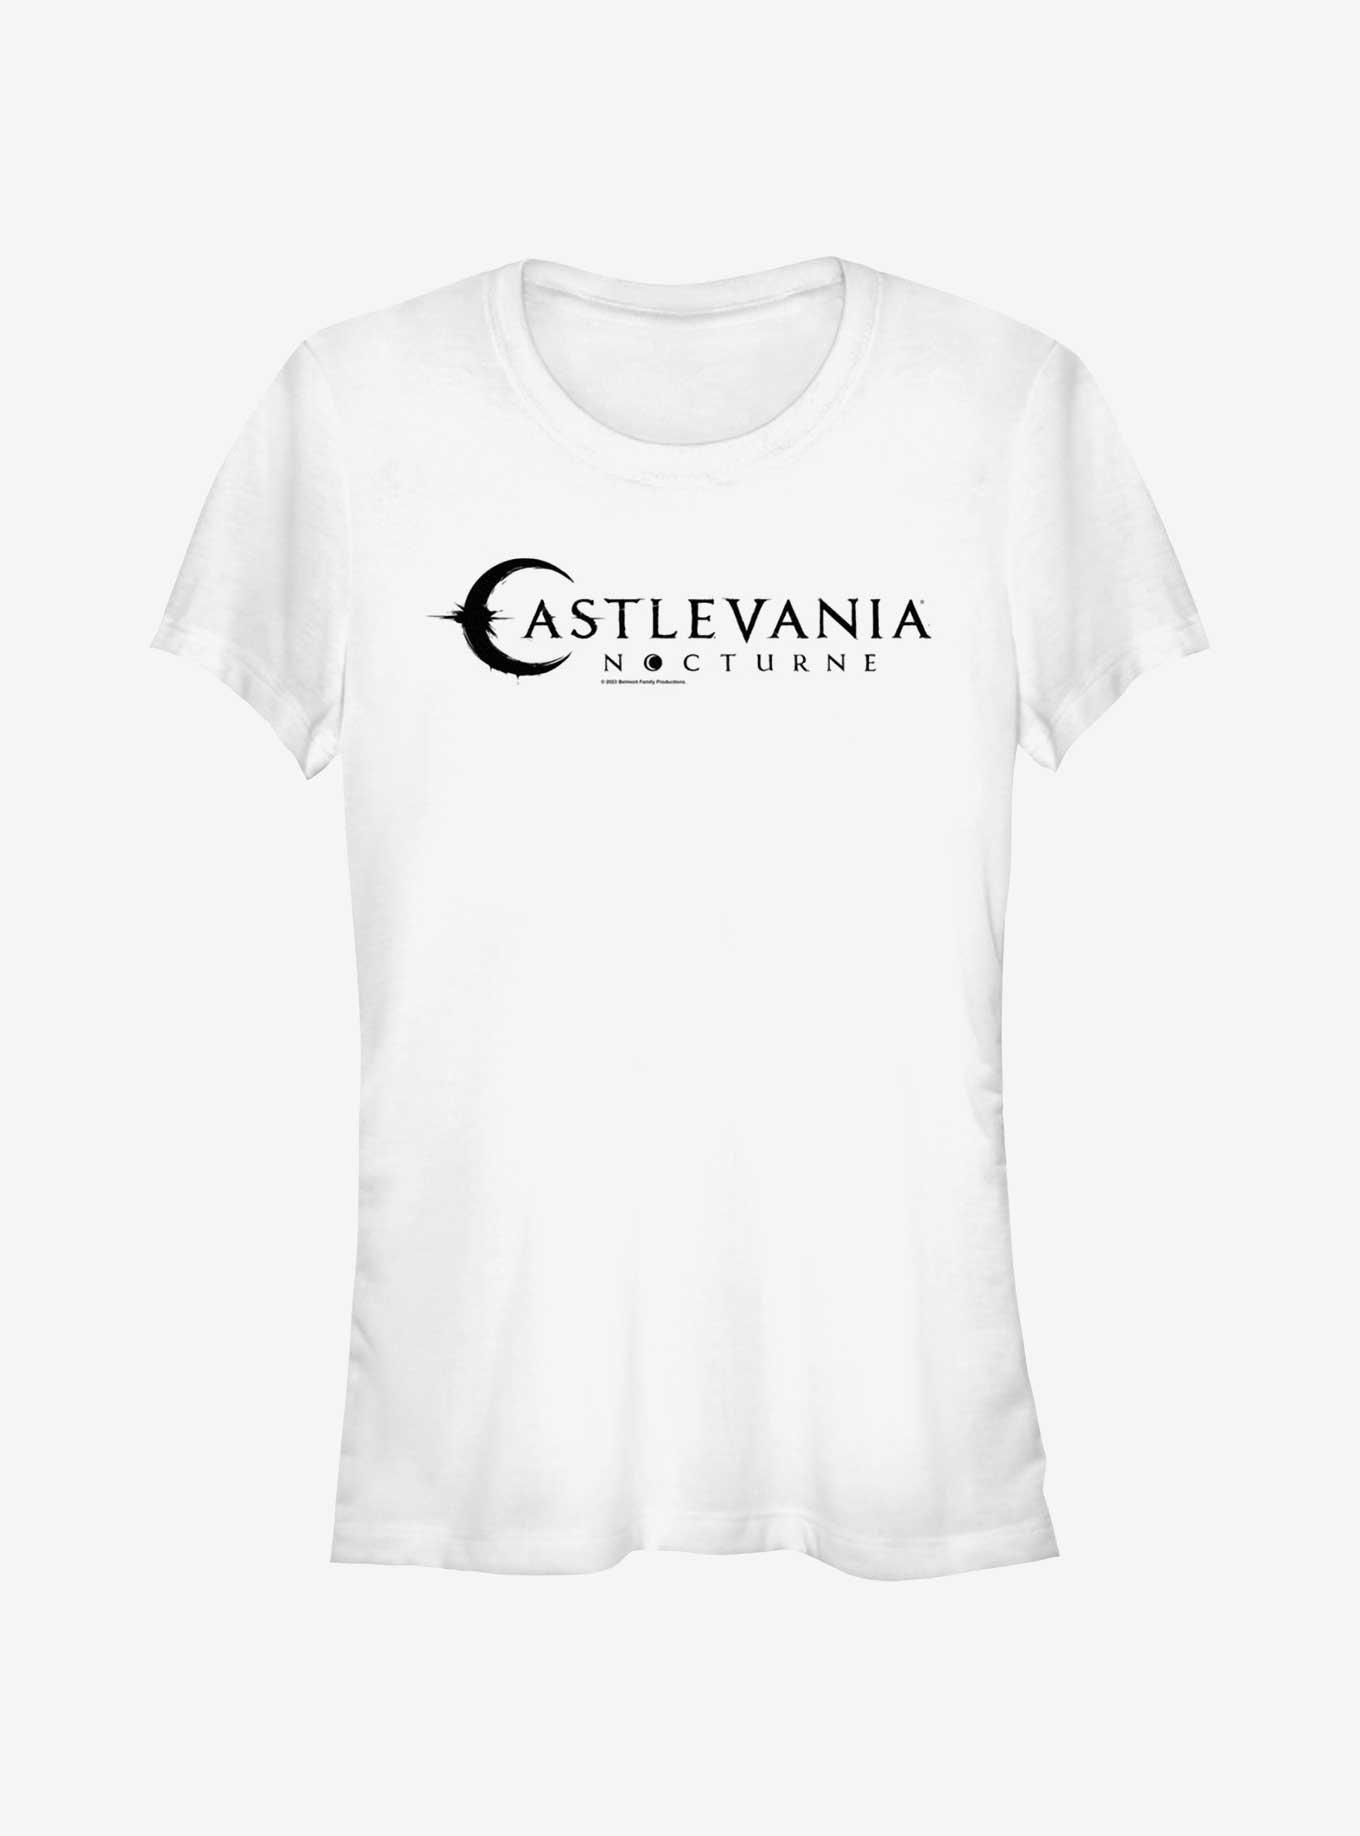 Castlevania: Nocturne Logo Girls T-Shirt, WHITE, hi-res